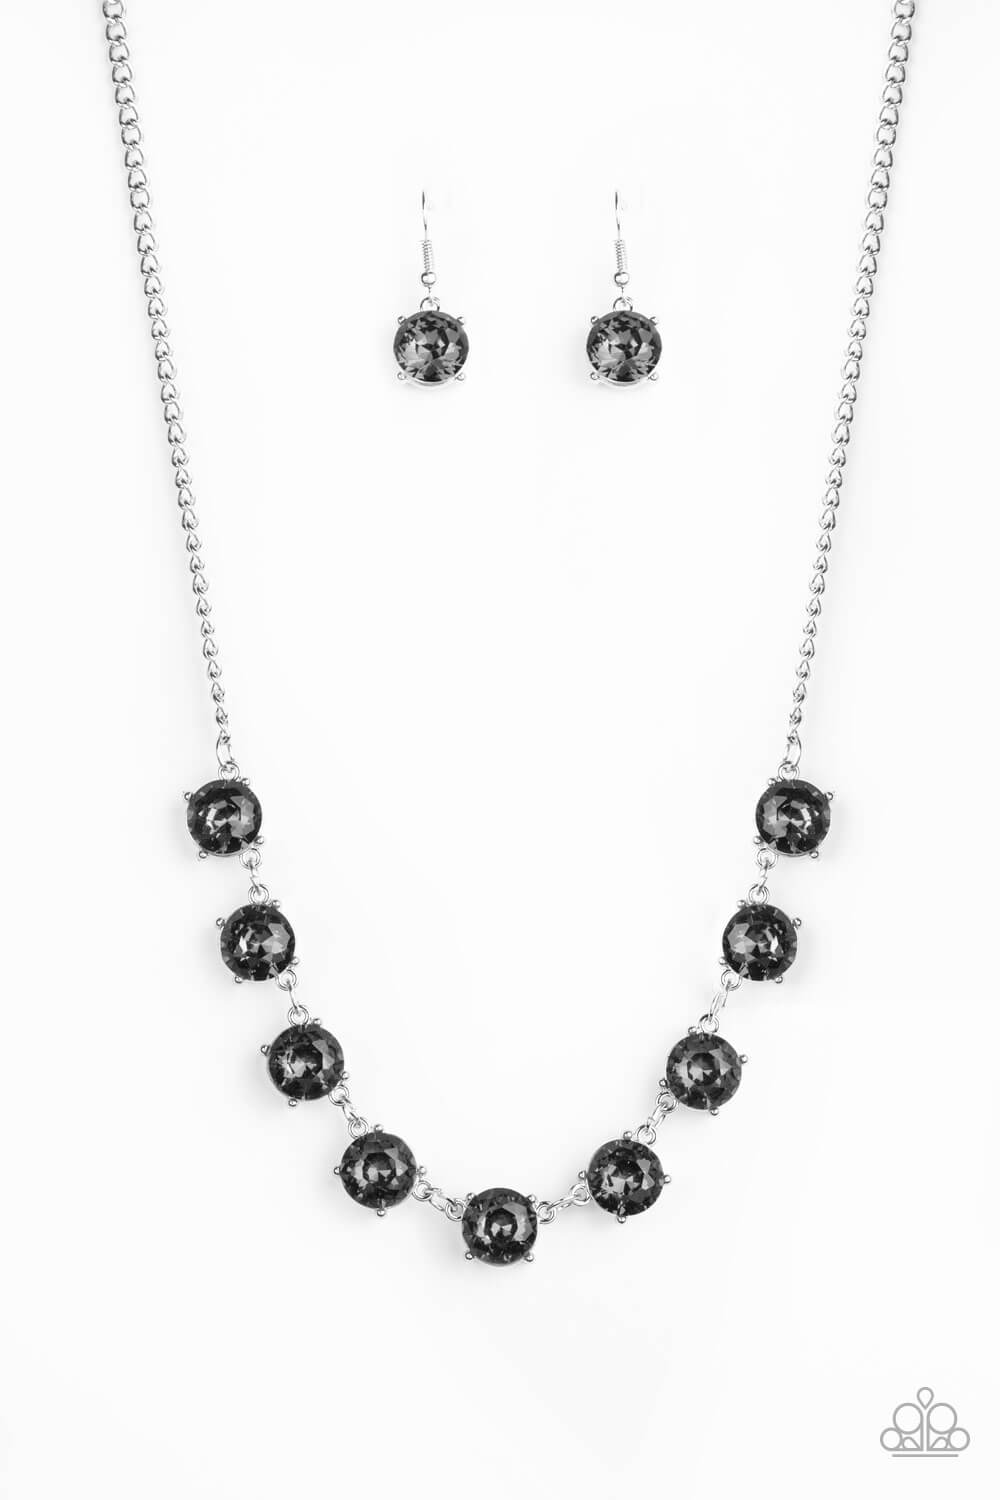 Iridescent Icing - Silver Necklace Set - Princess Glam Shop